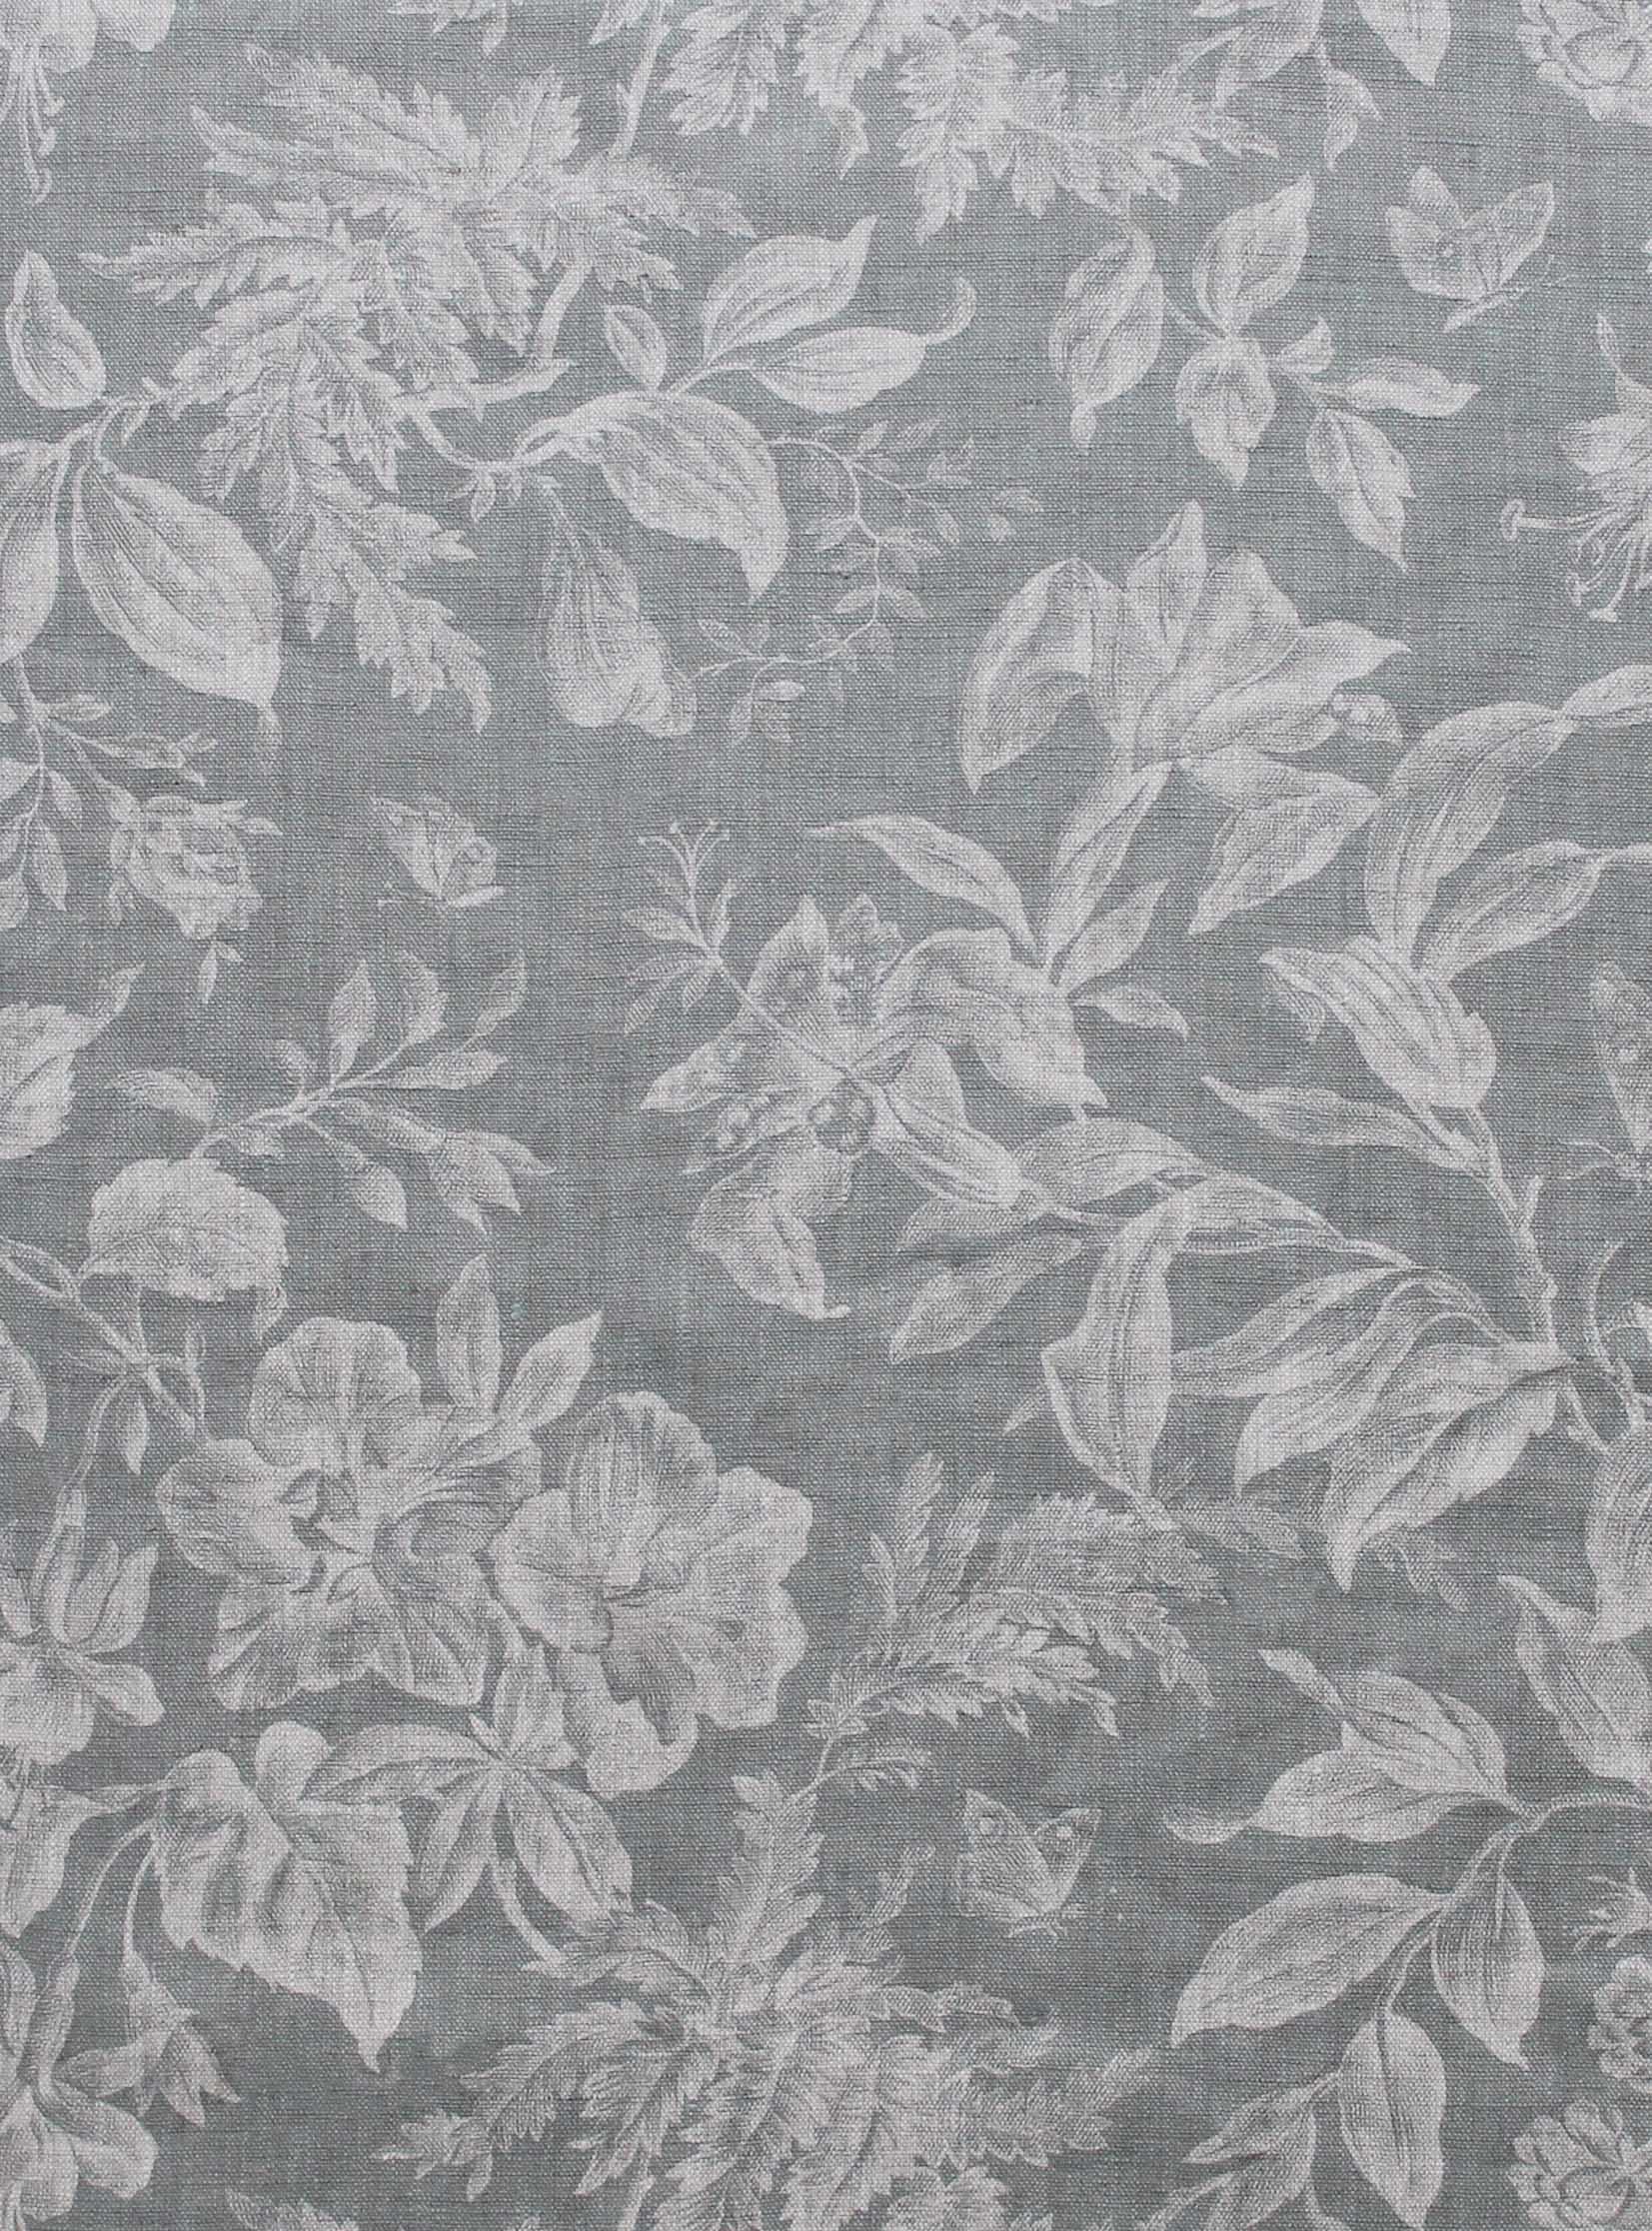 Floraison Manoir Grey - Natural Linen - pillolondon.com